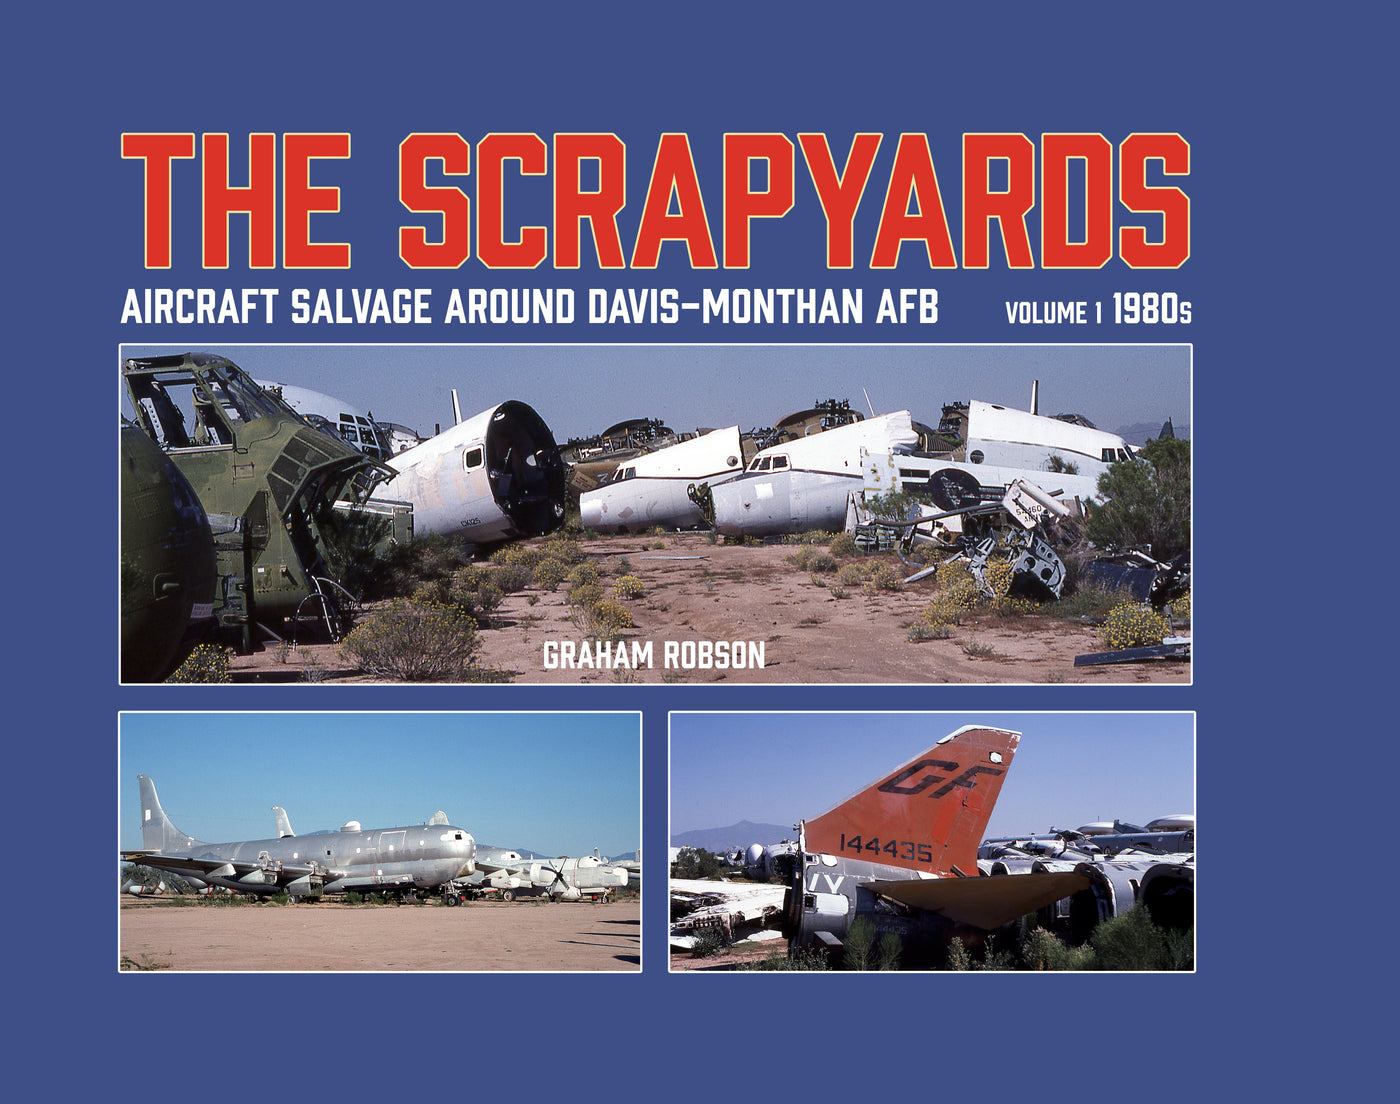 The Scrapyards